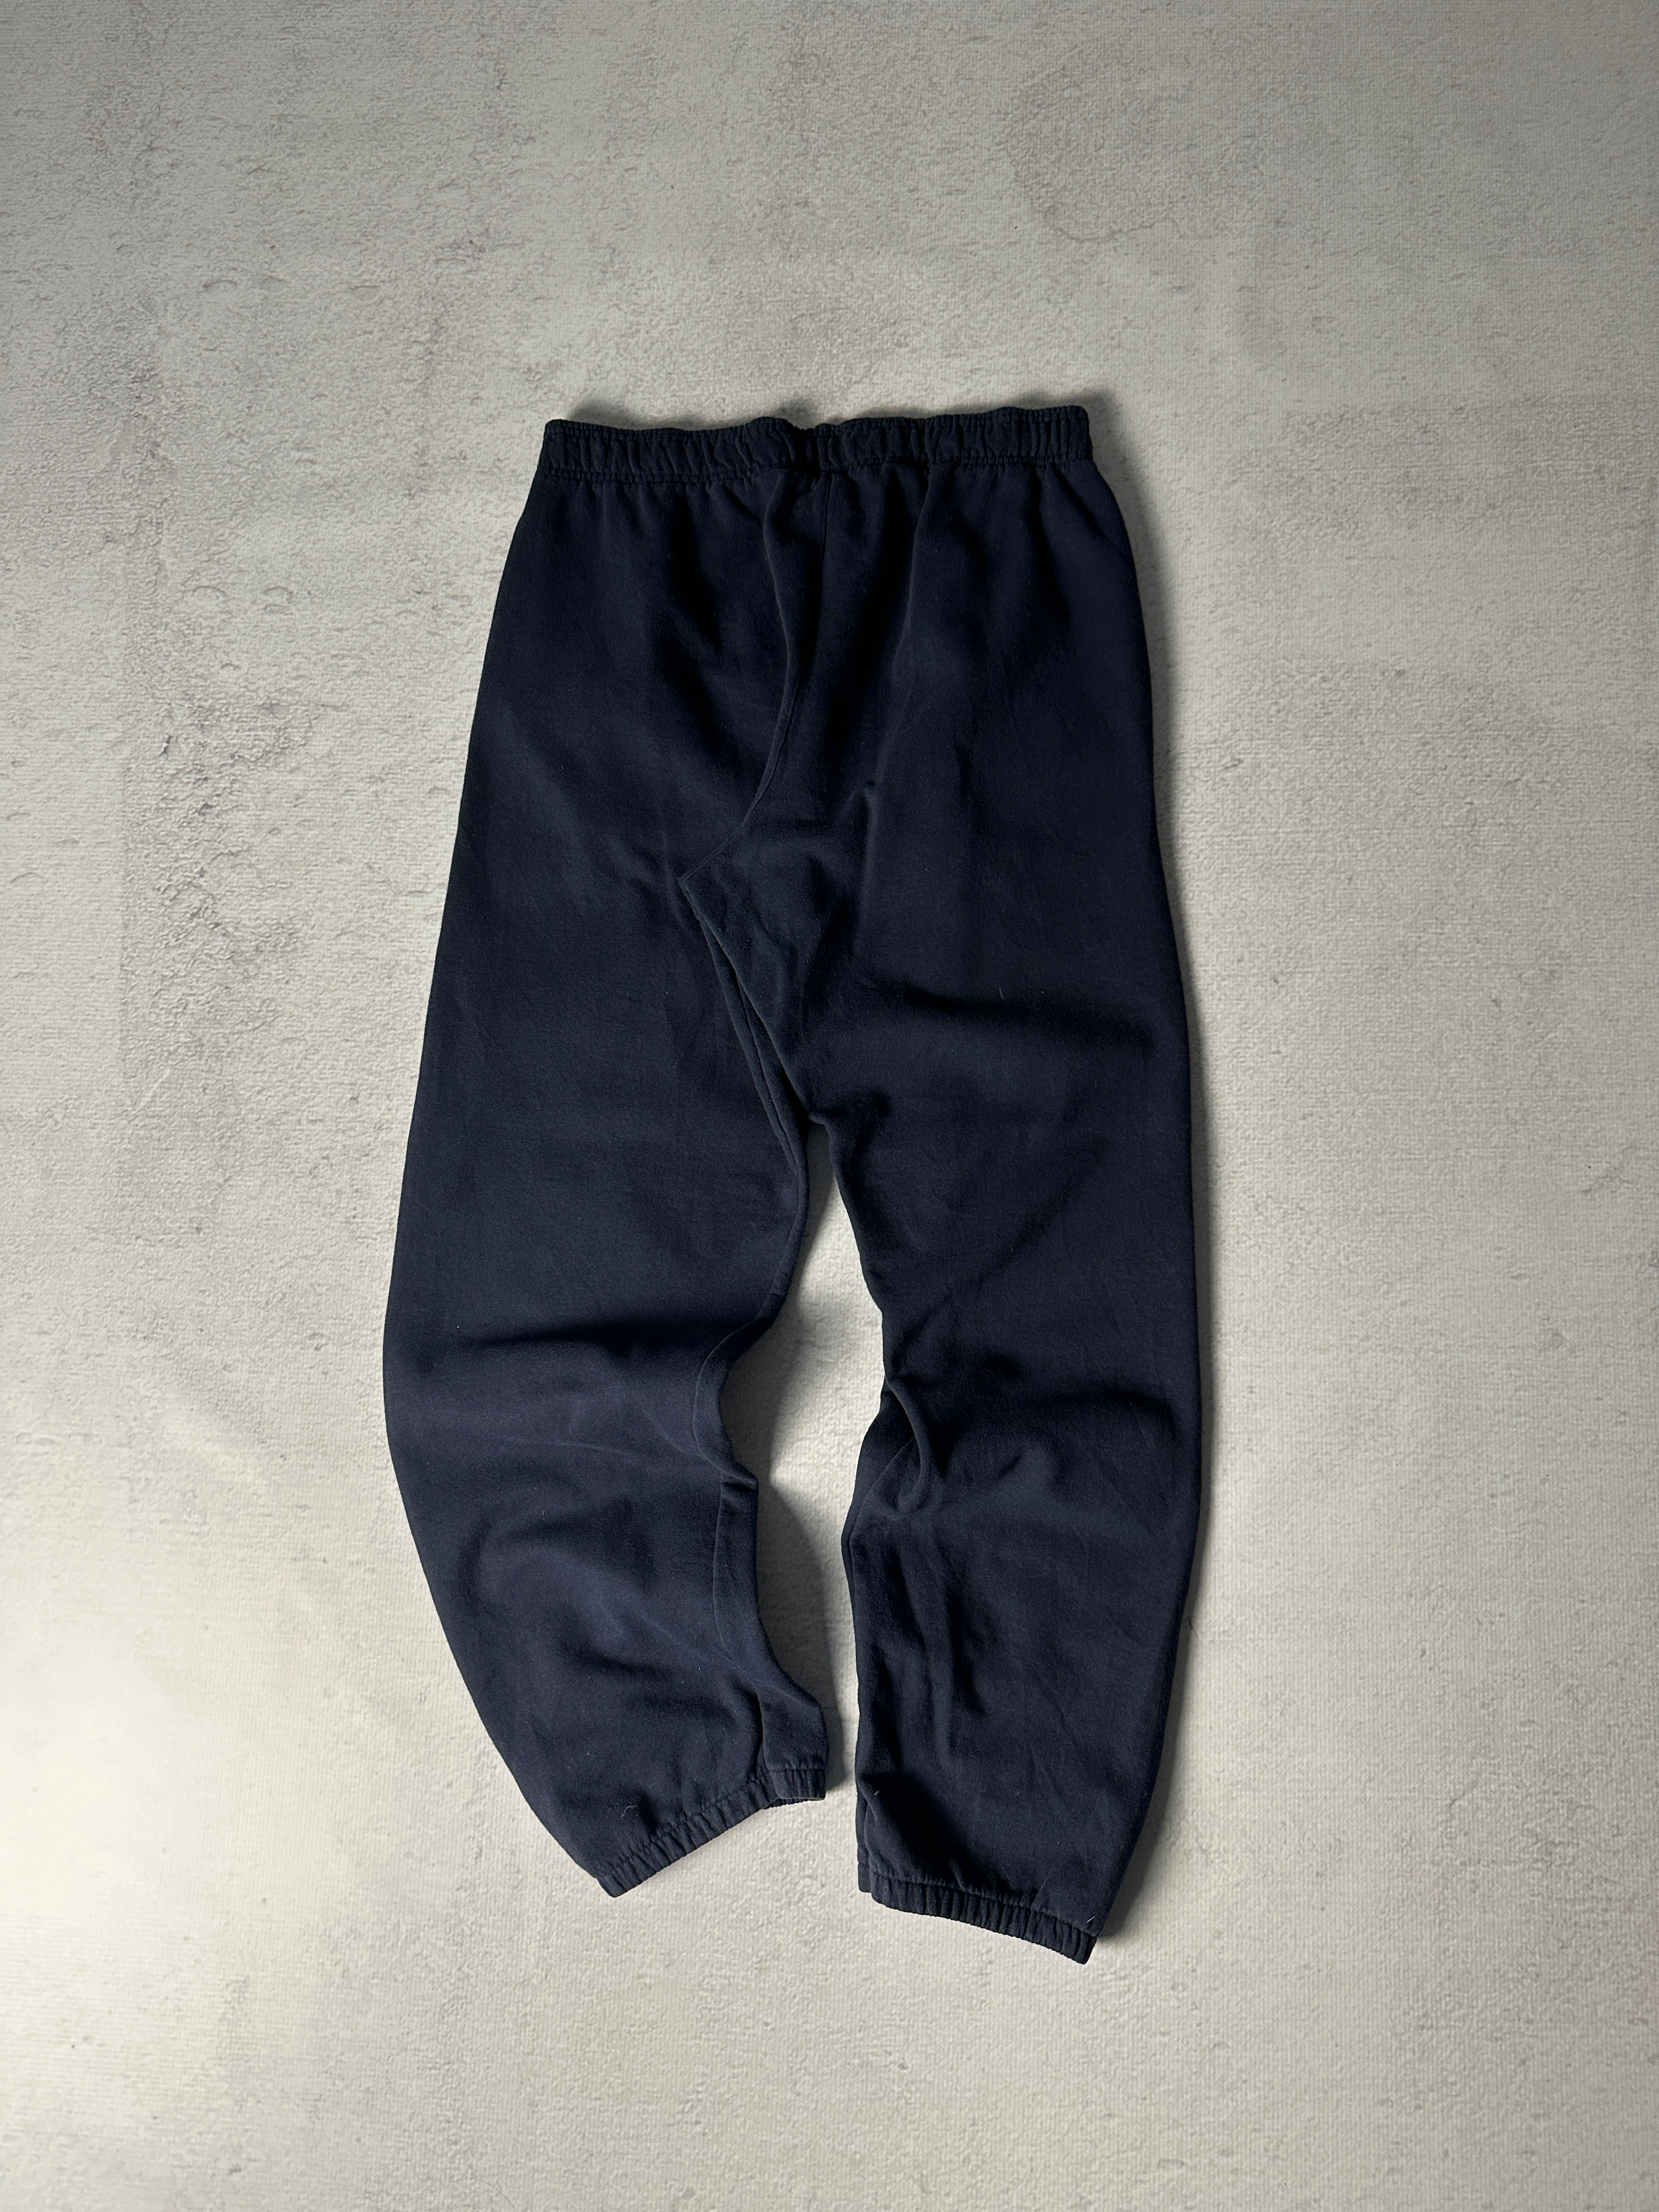 Vintage Champion Cuffed Sweatpants - Men's XL